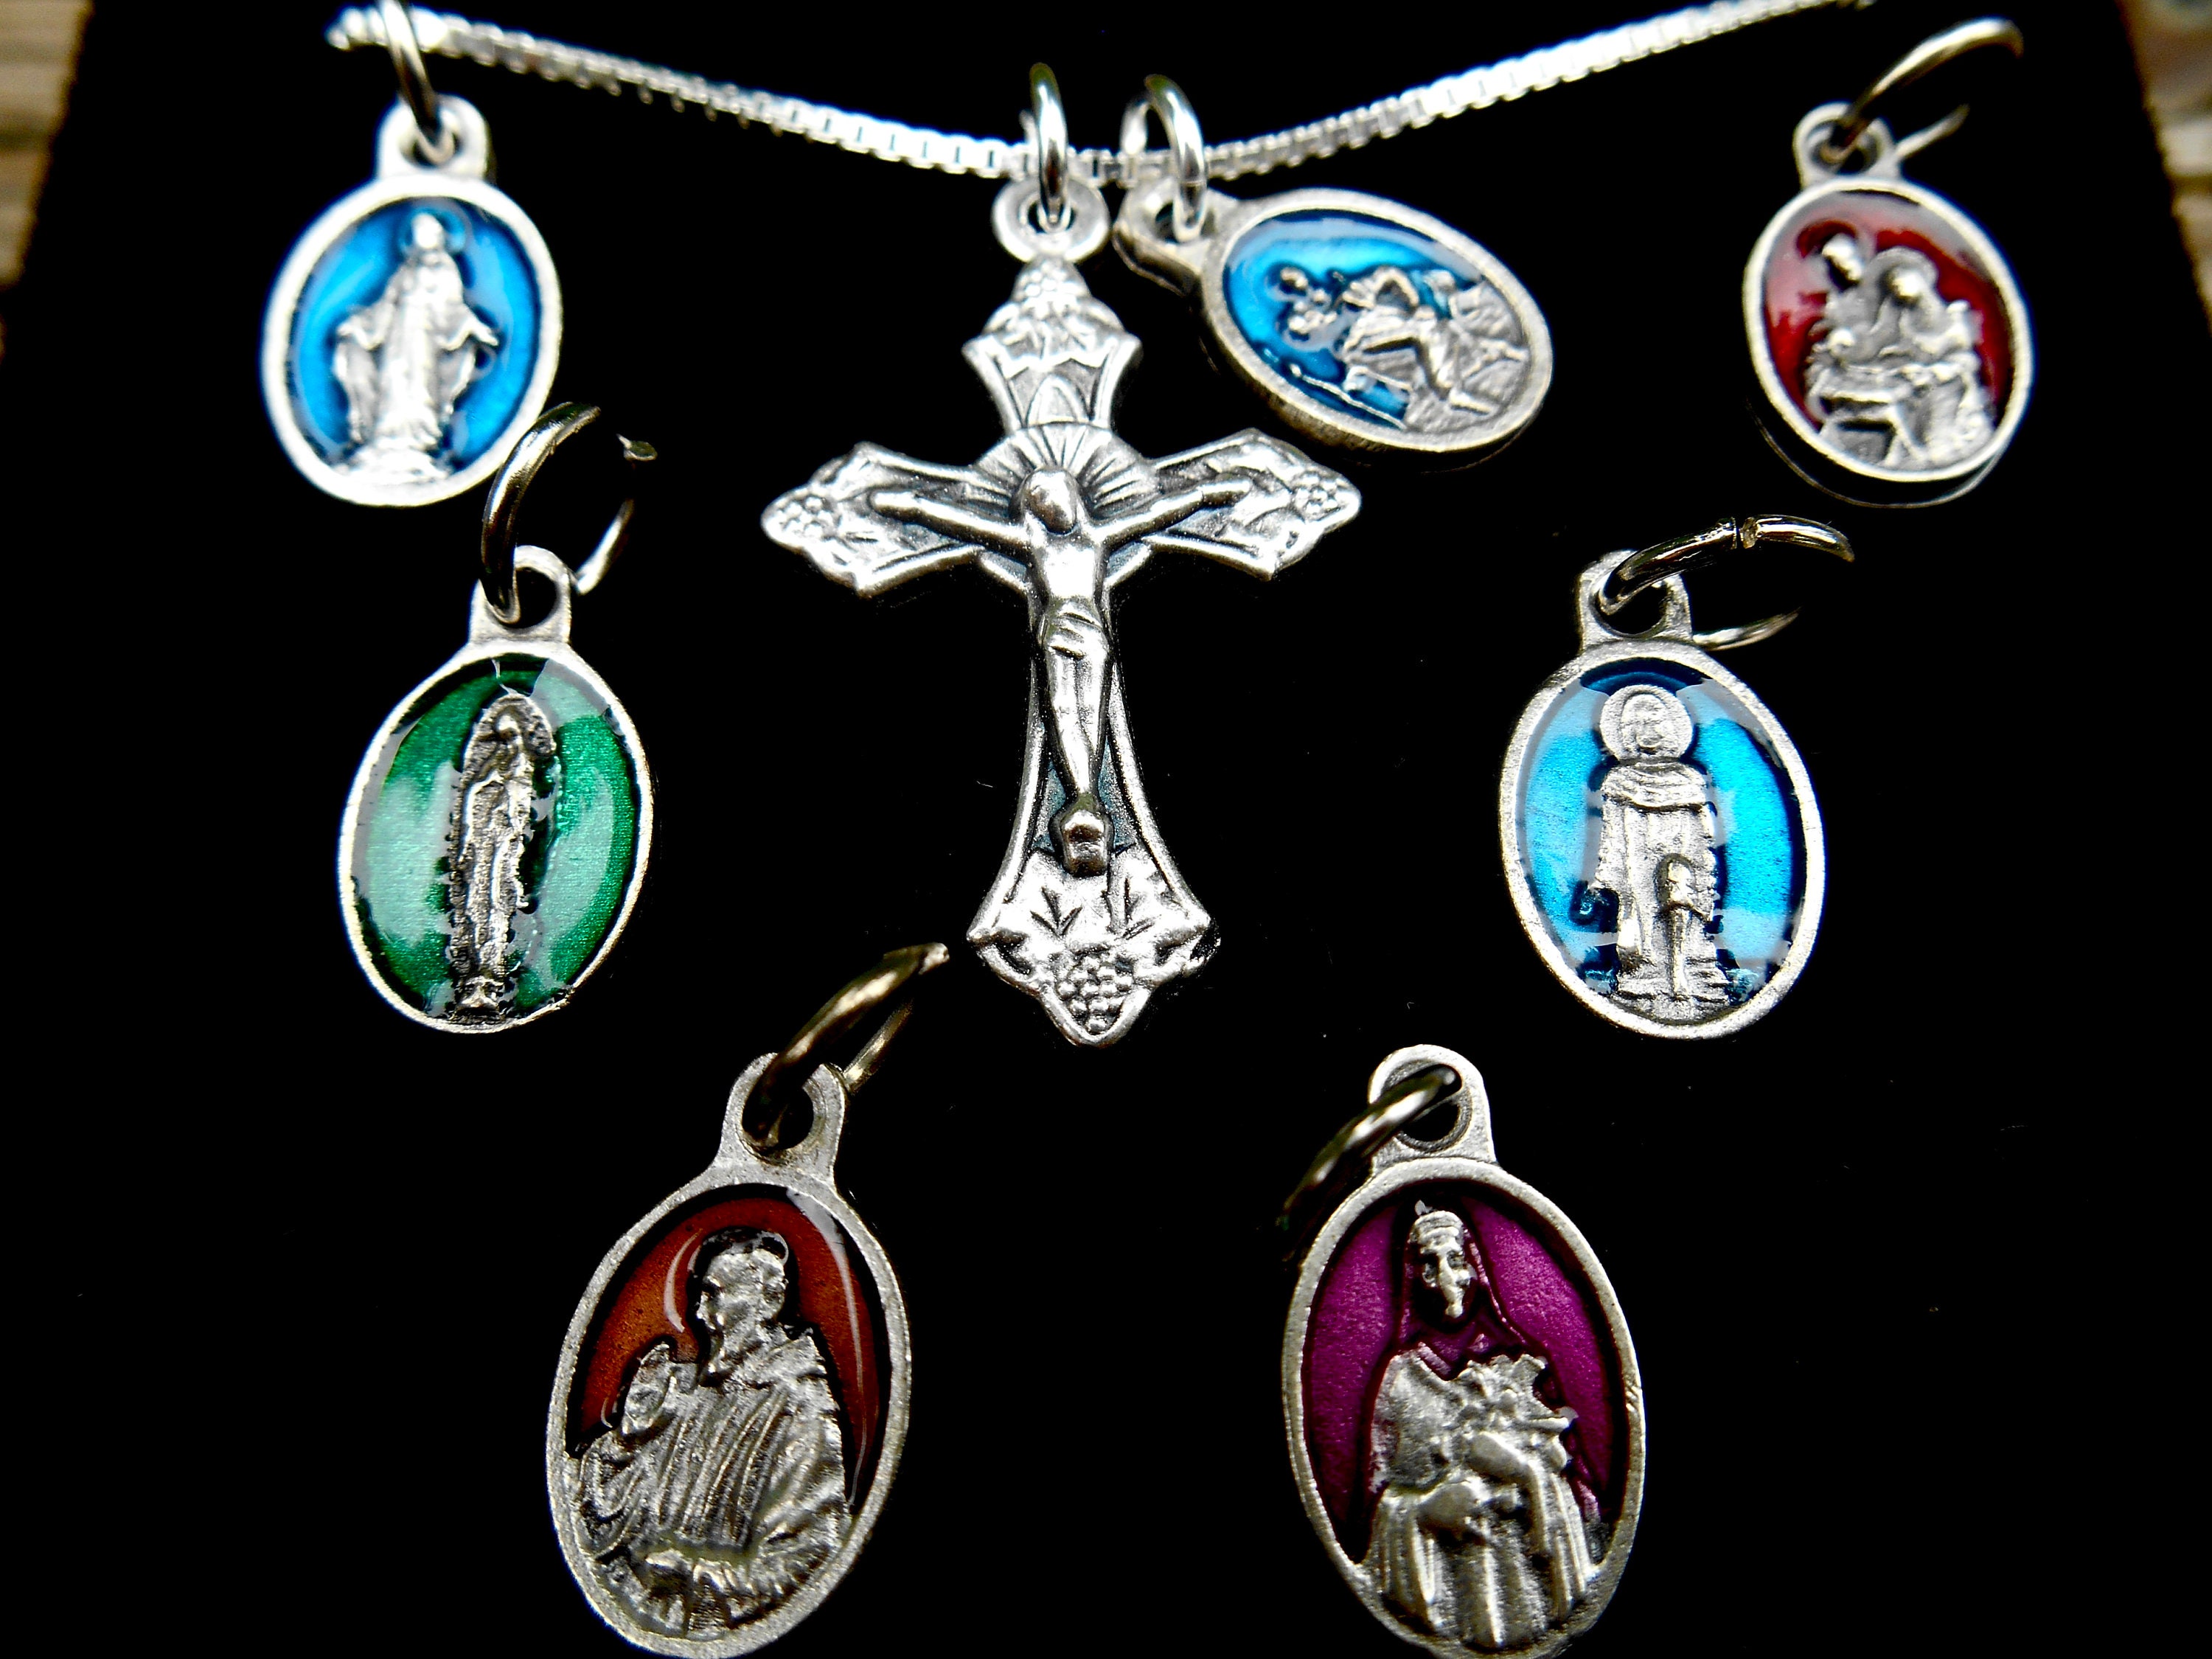 50Pcs Catholic Religious Enamel Medals Charms  Pendants Holy Cross Accessories 